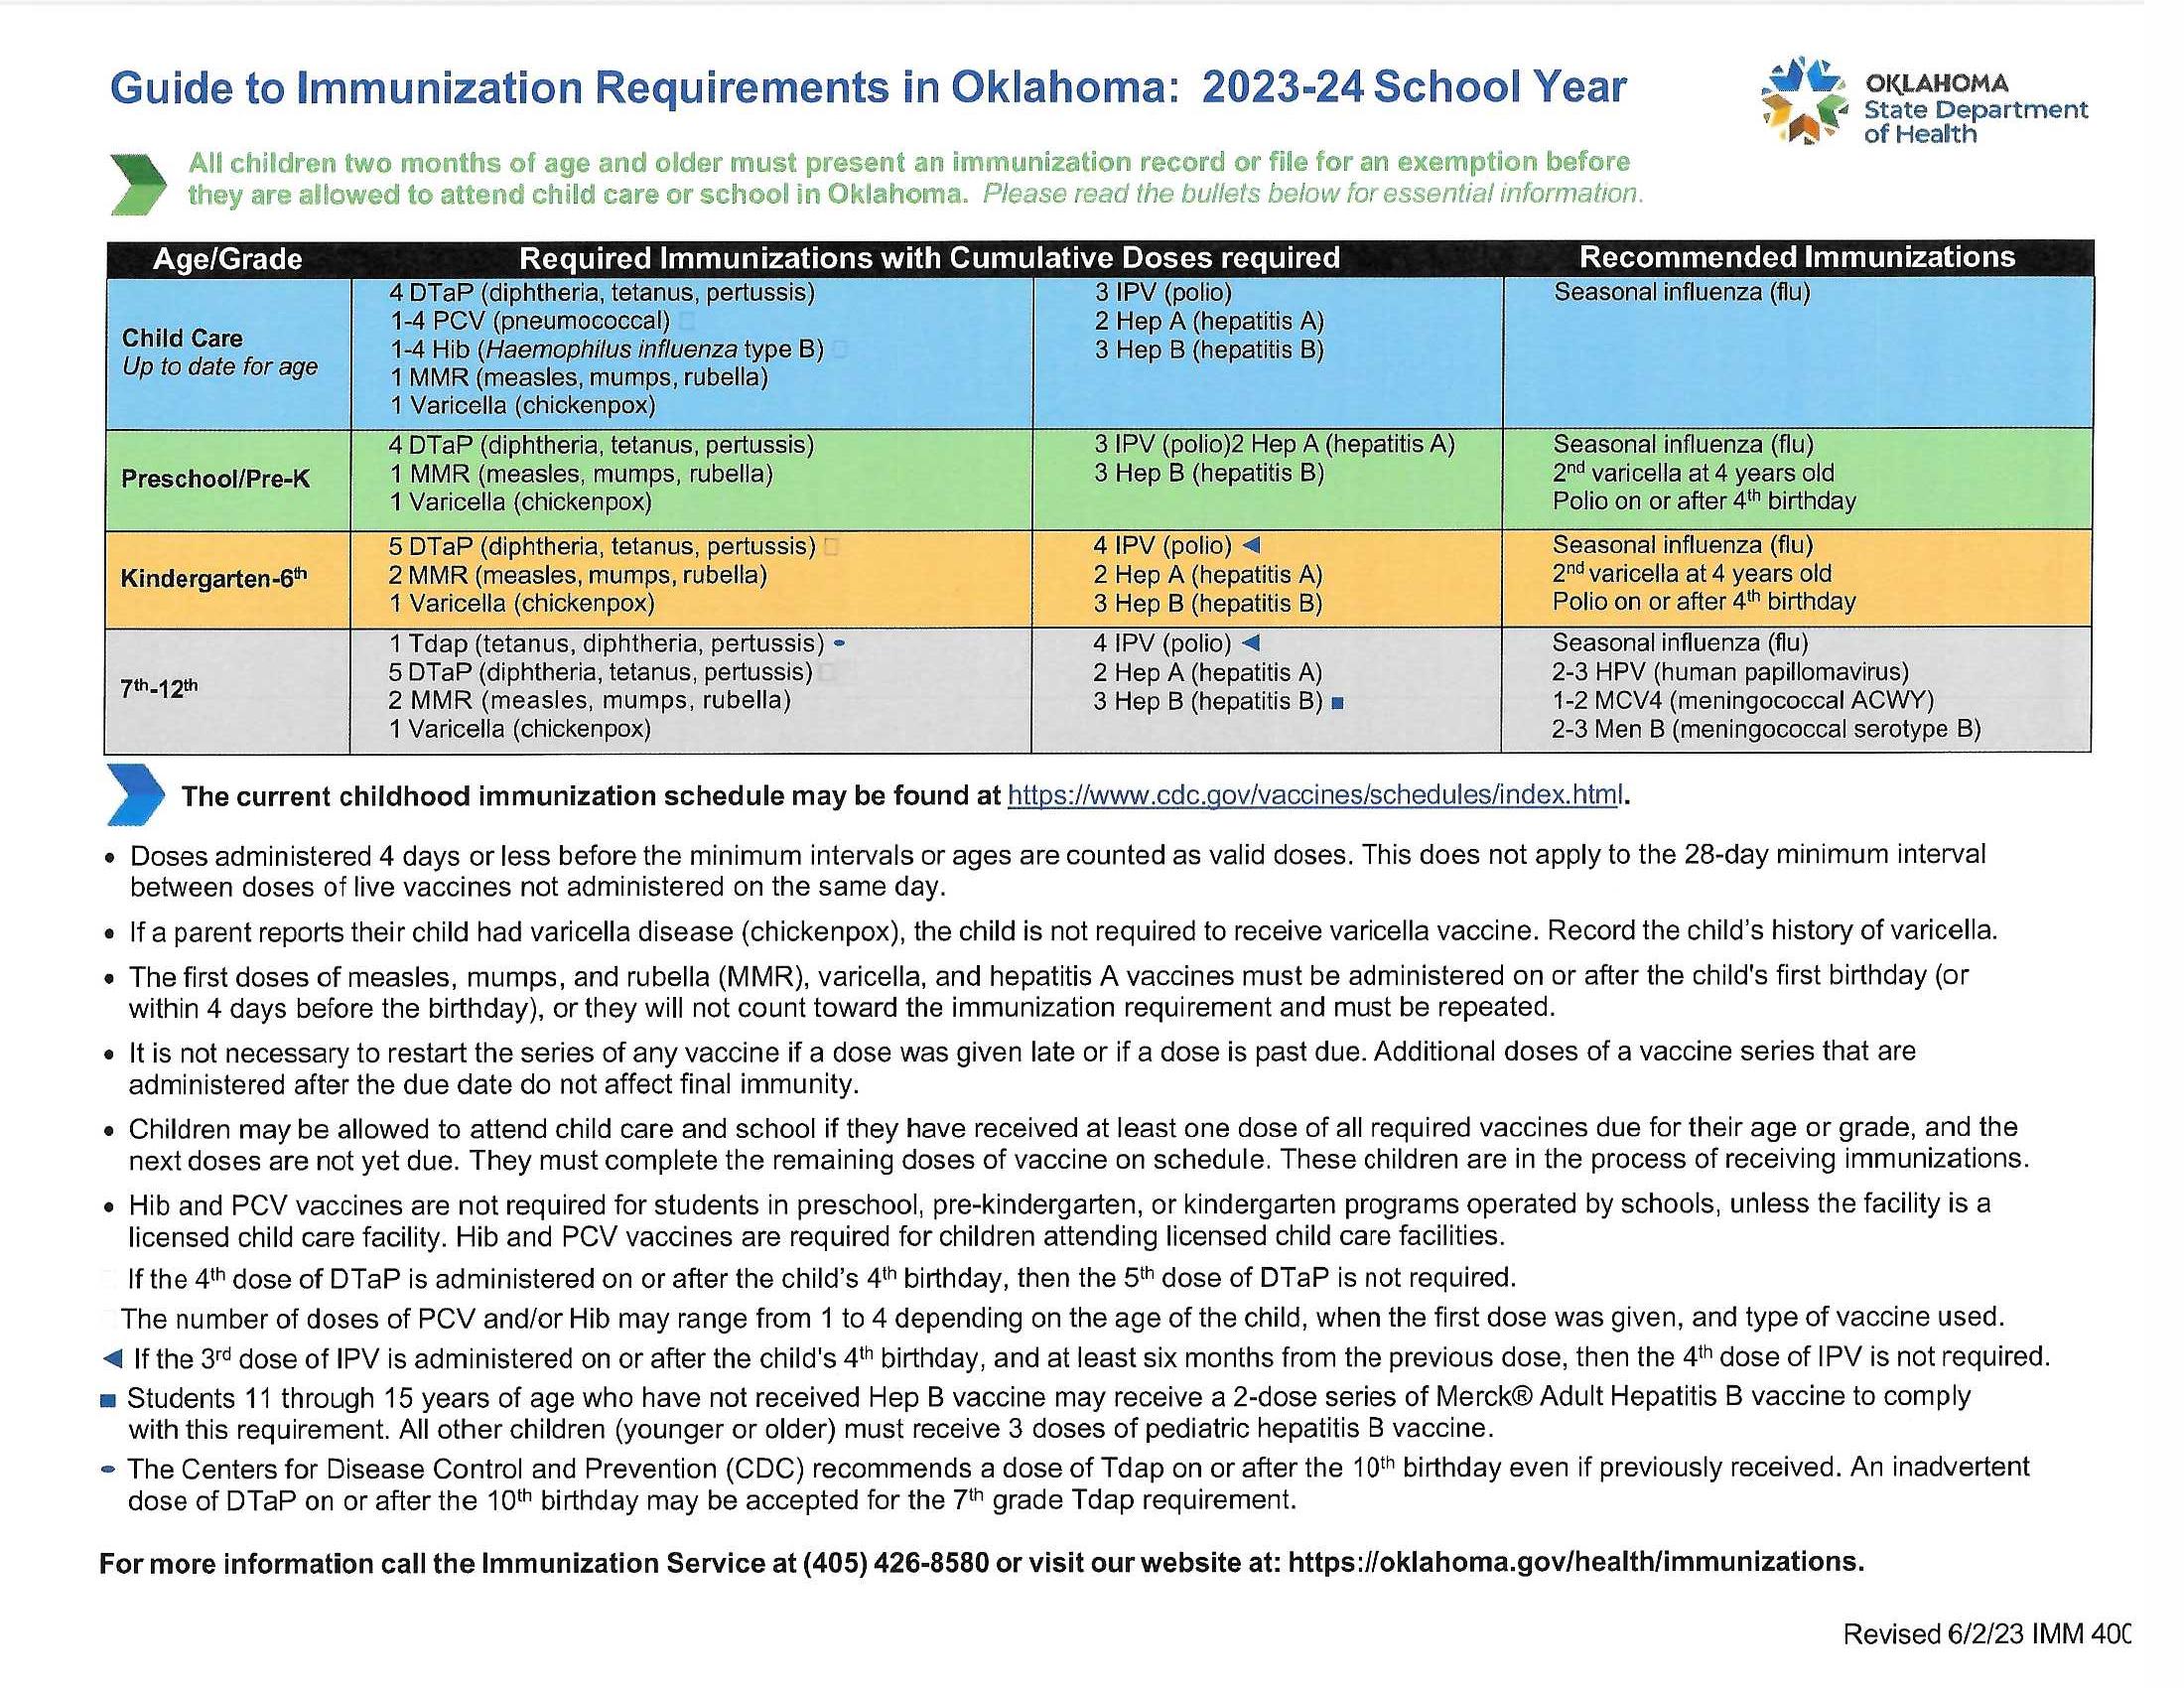 23-24 immunization requirements